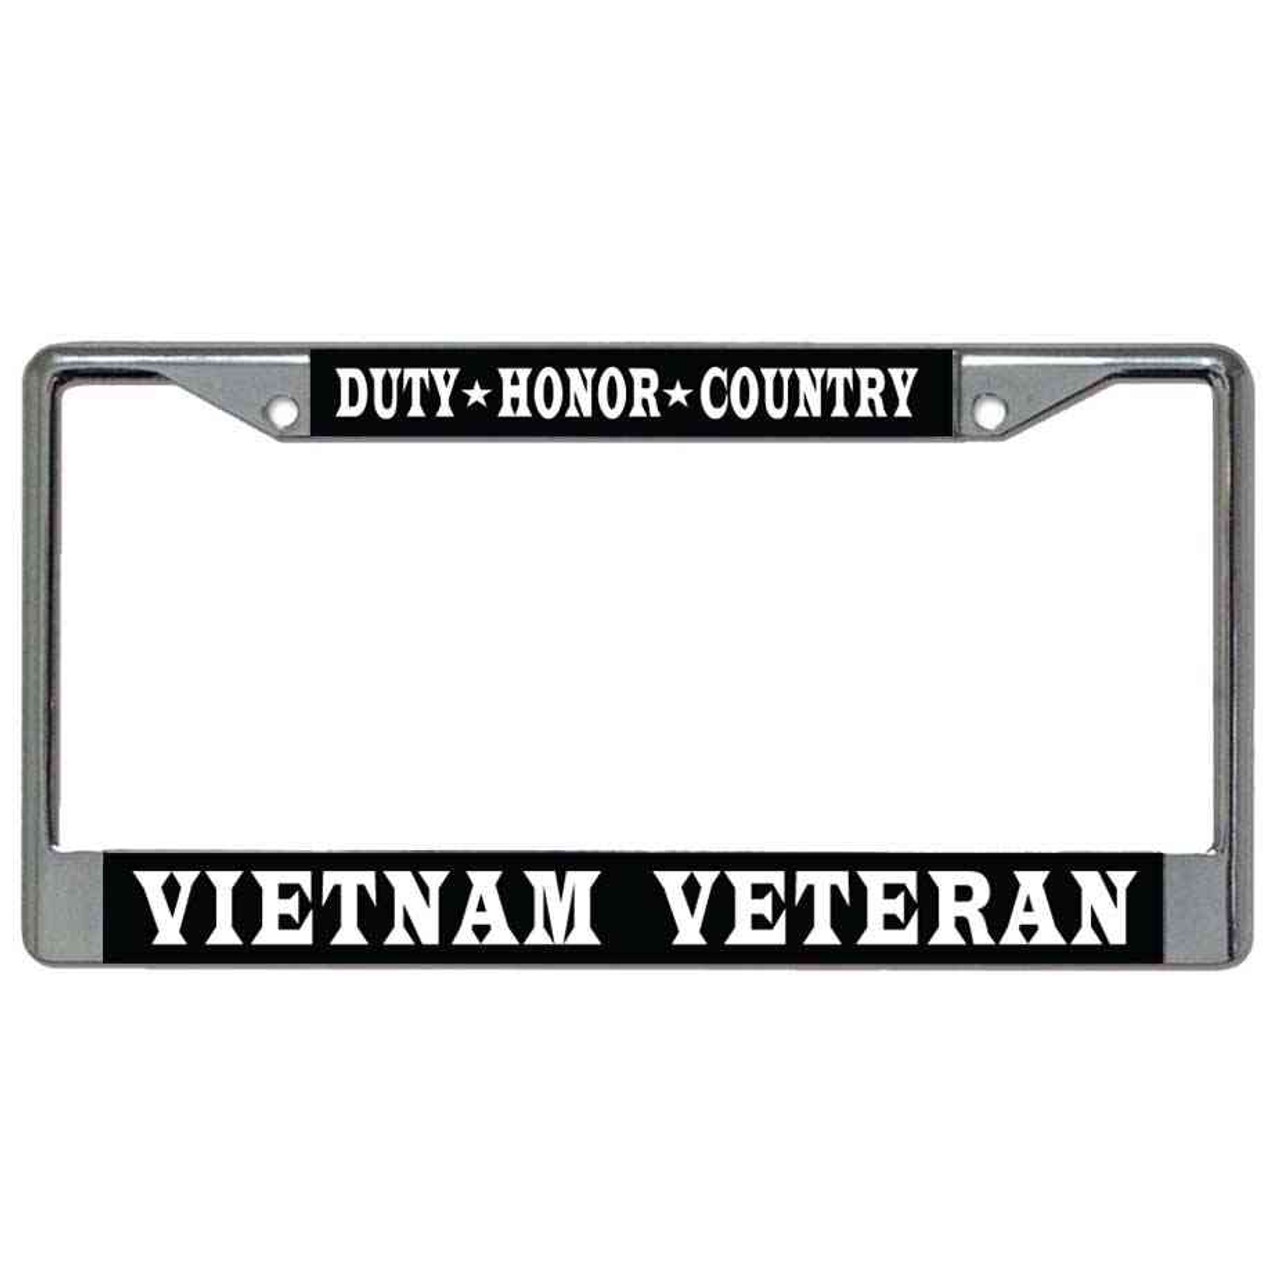 vietnam veteran dutyhonorcountry license plate frame